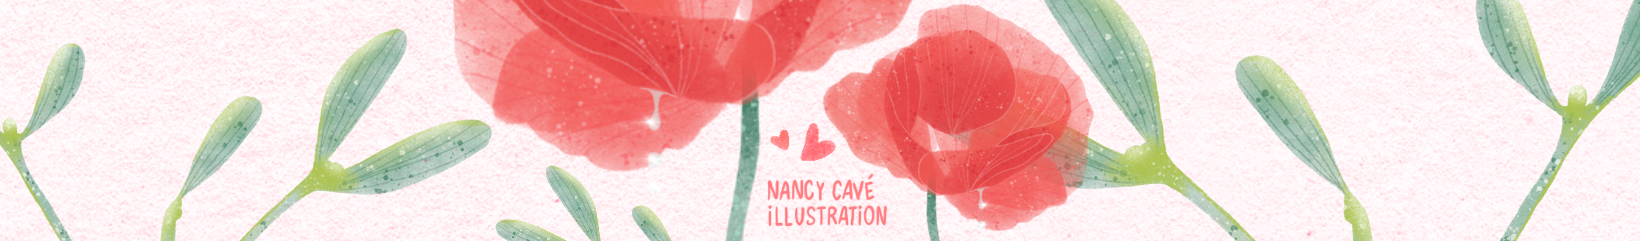 Banner de perfil de Nancy Cavé